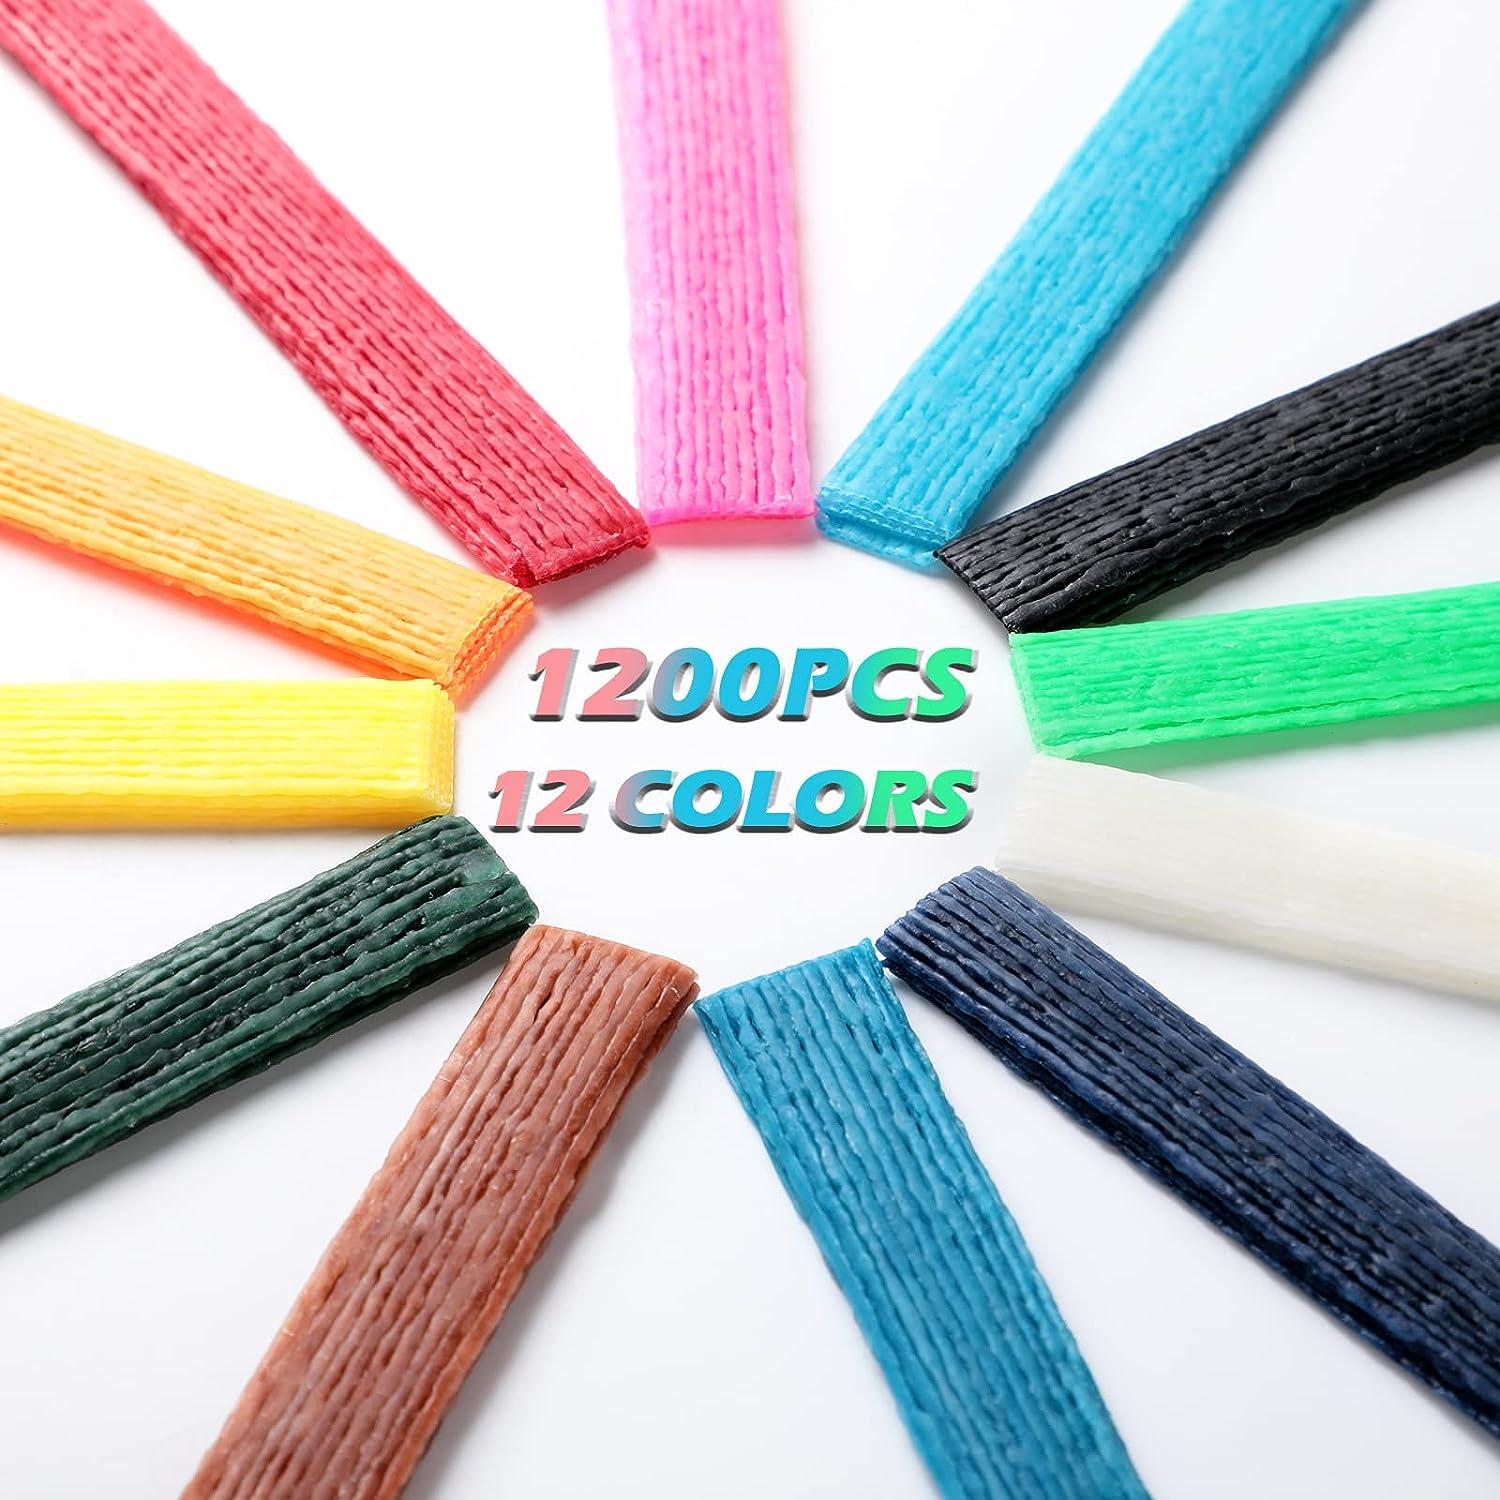  Wax Craft Sticks for Kids, Bendable Sticky Wax Yarn